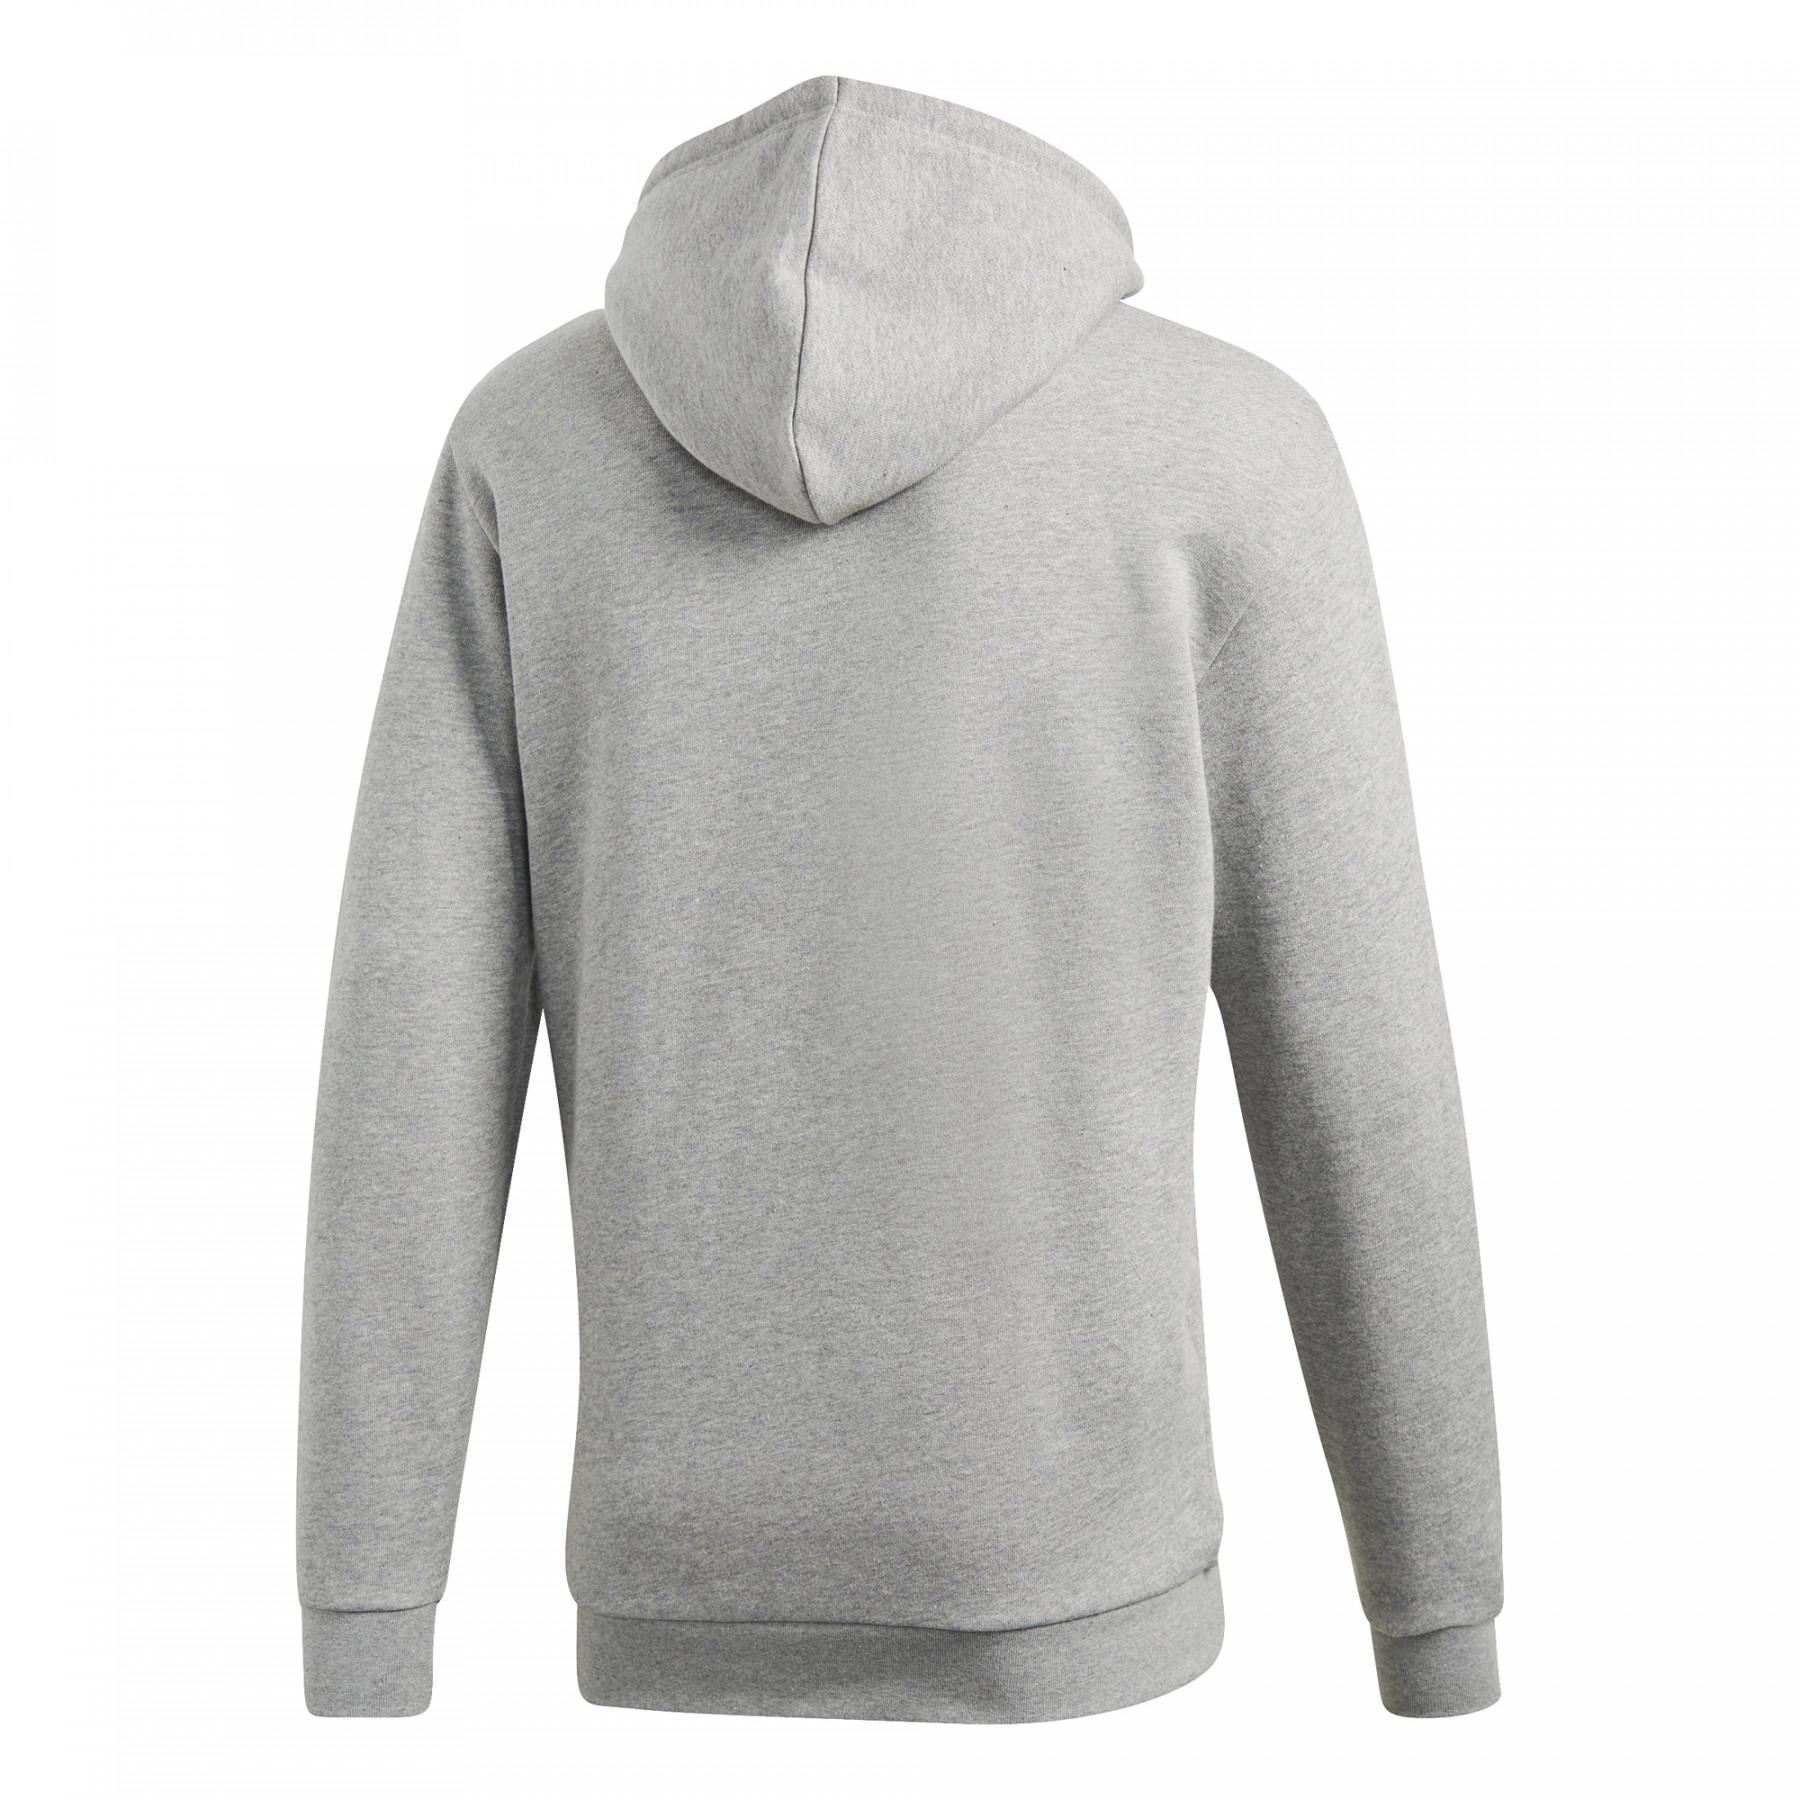 Hoodie adidas Trefoil logo - Sweatshirts - Lifestyle Male - Lifestyle